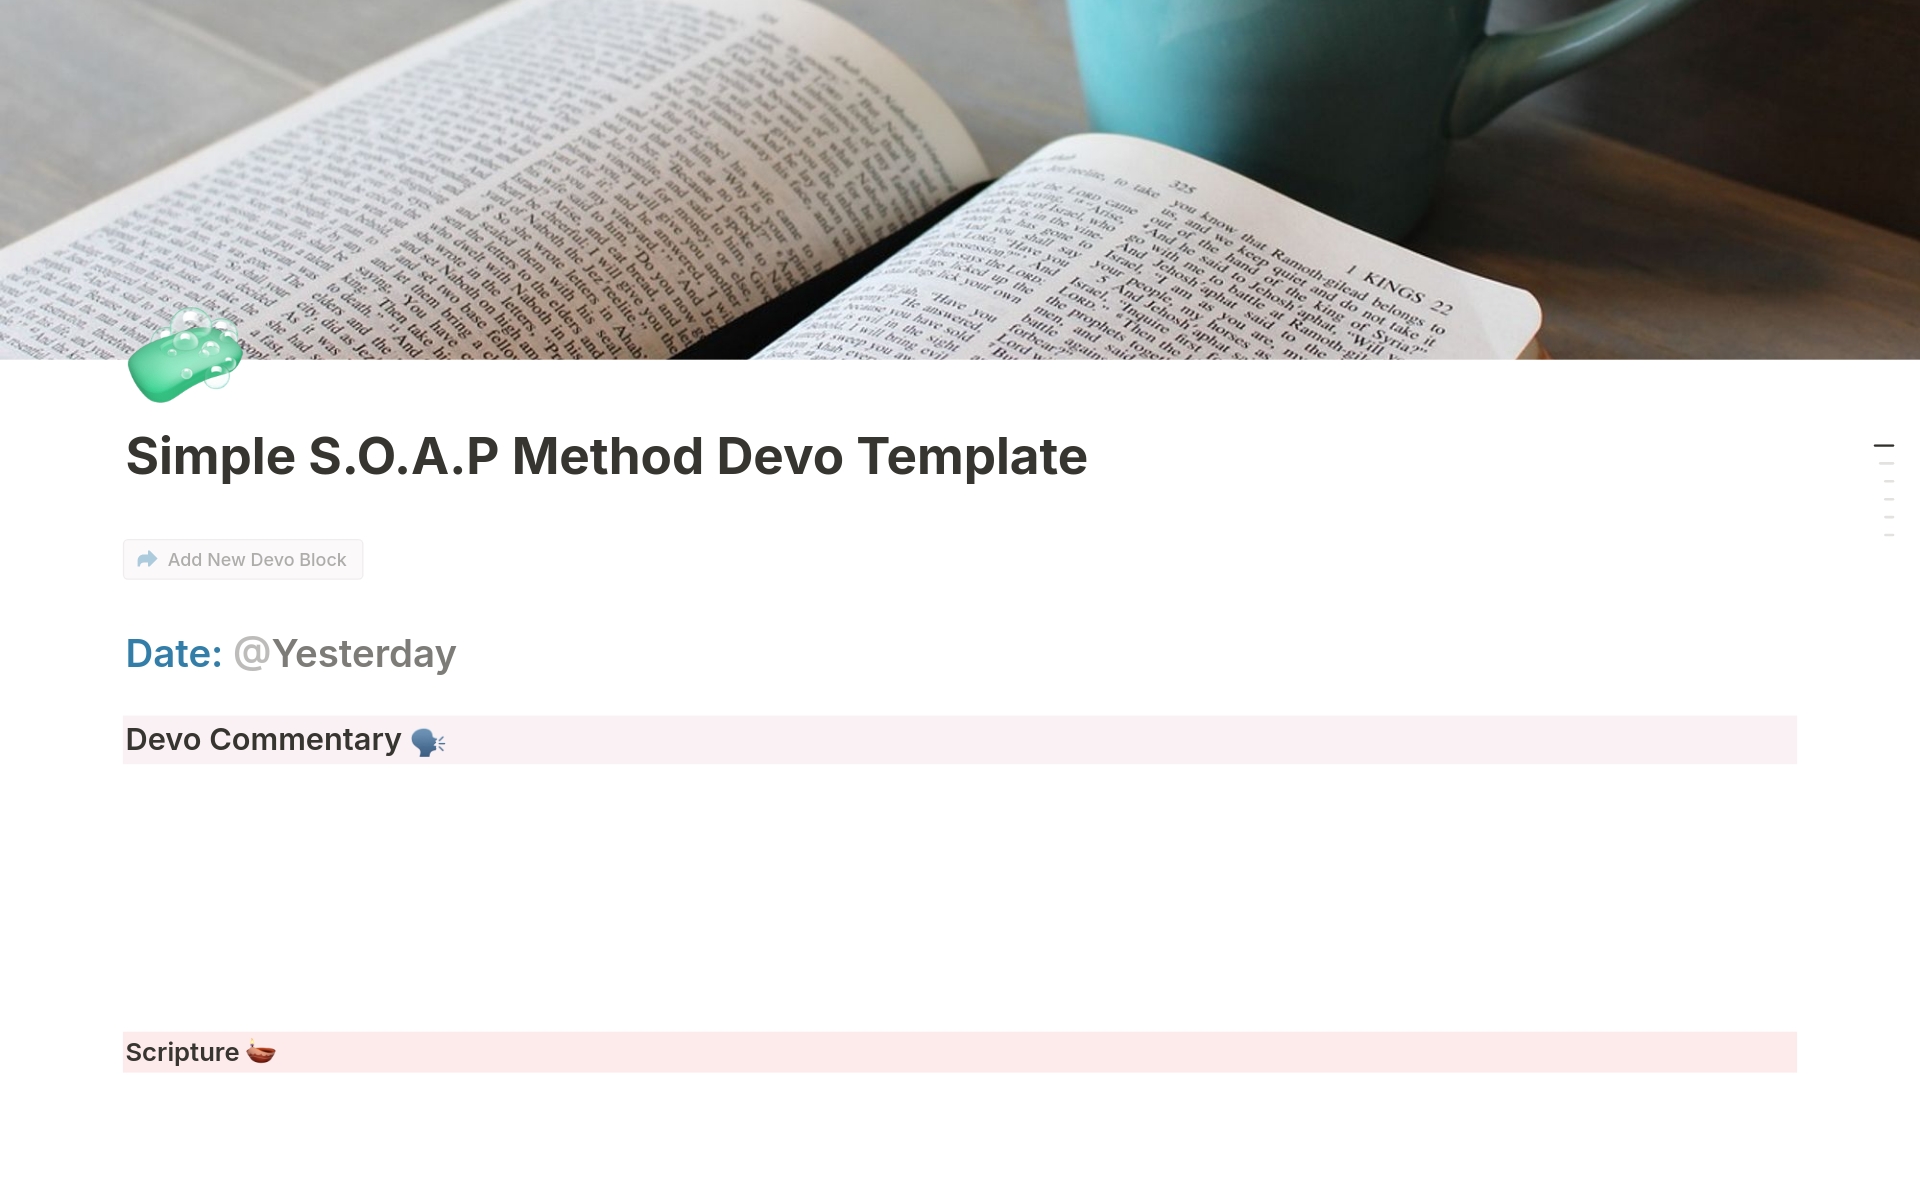 Simple S.O.A.P Method Journal님의 템플릿 미리보기